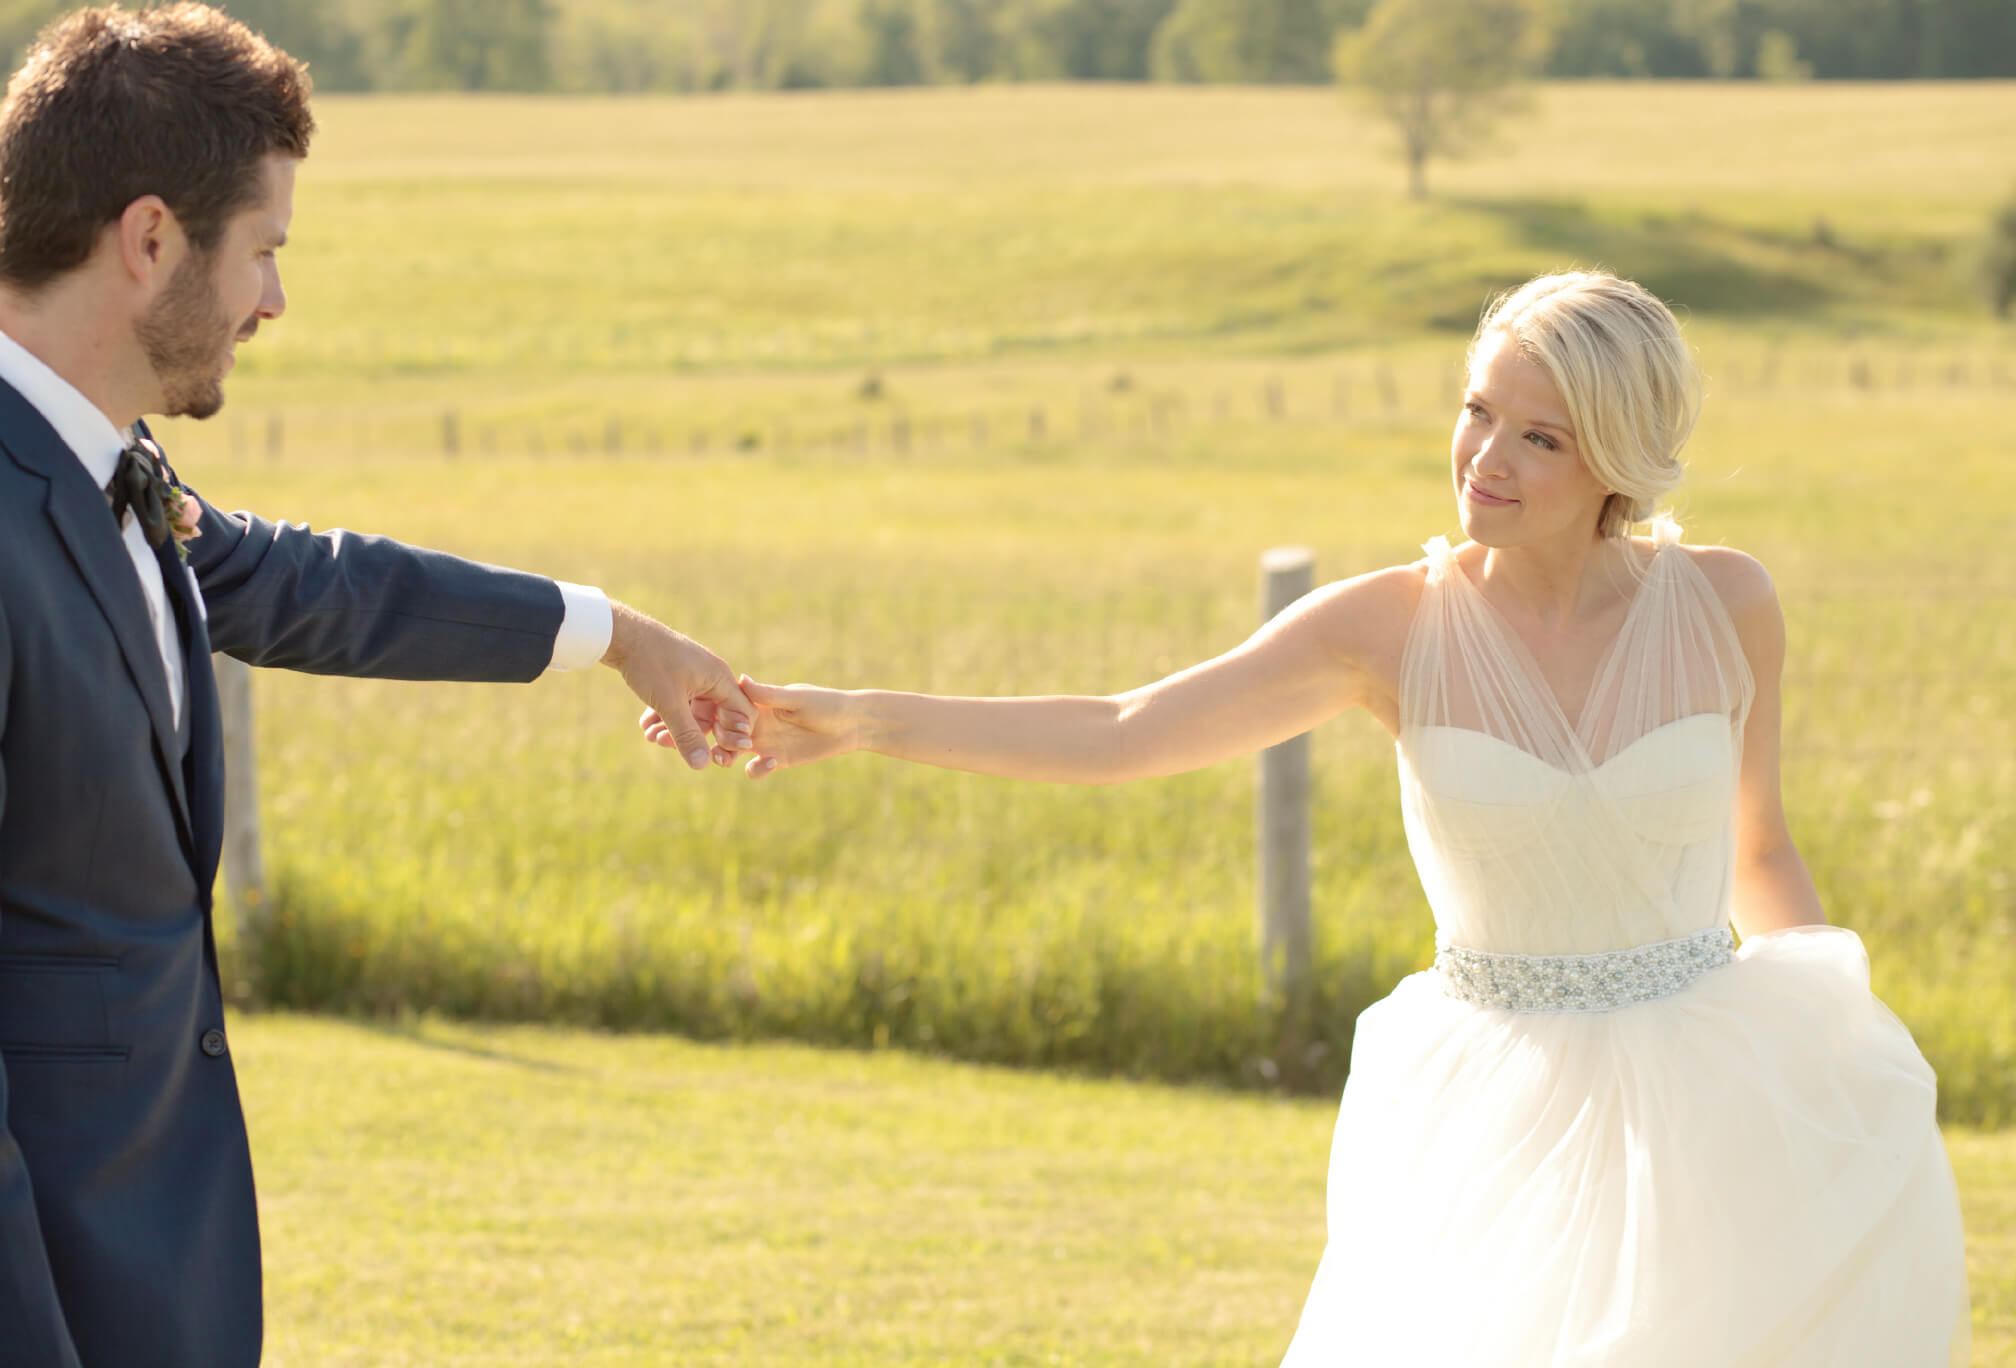 dancing in a field bride and groom